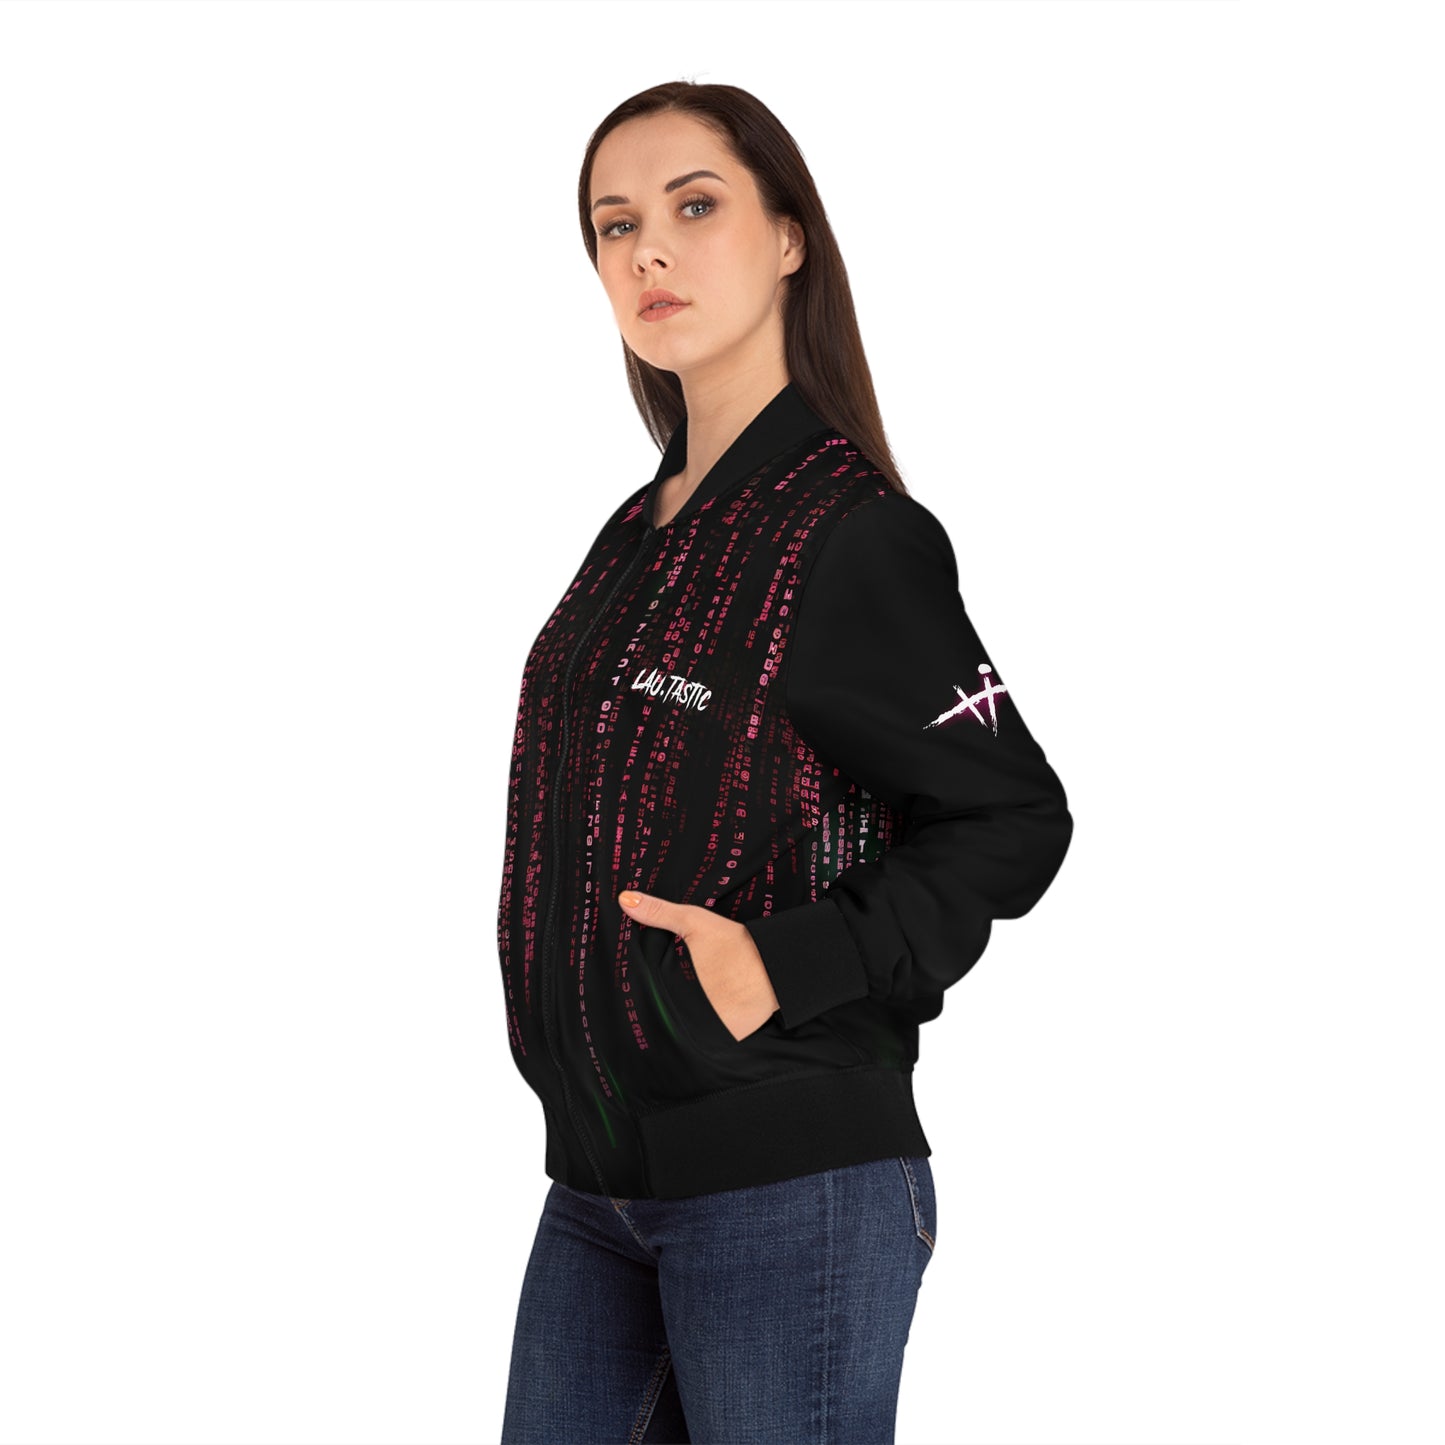 LAU.TASTIC | Matrix Pink - Women's Bomber Jacket